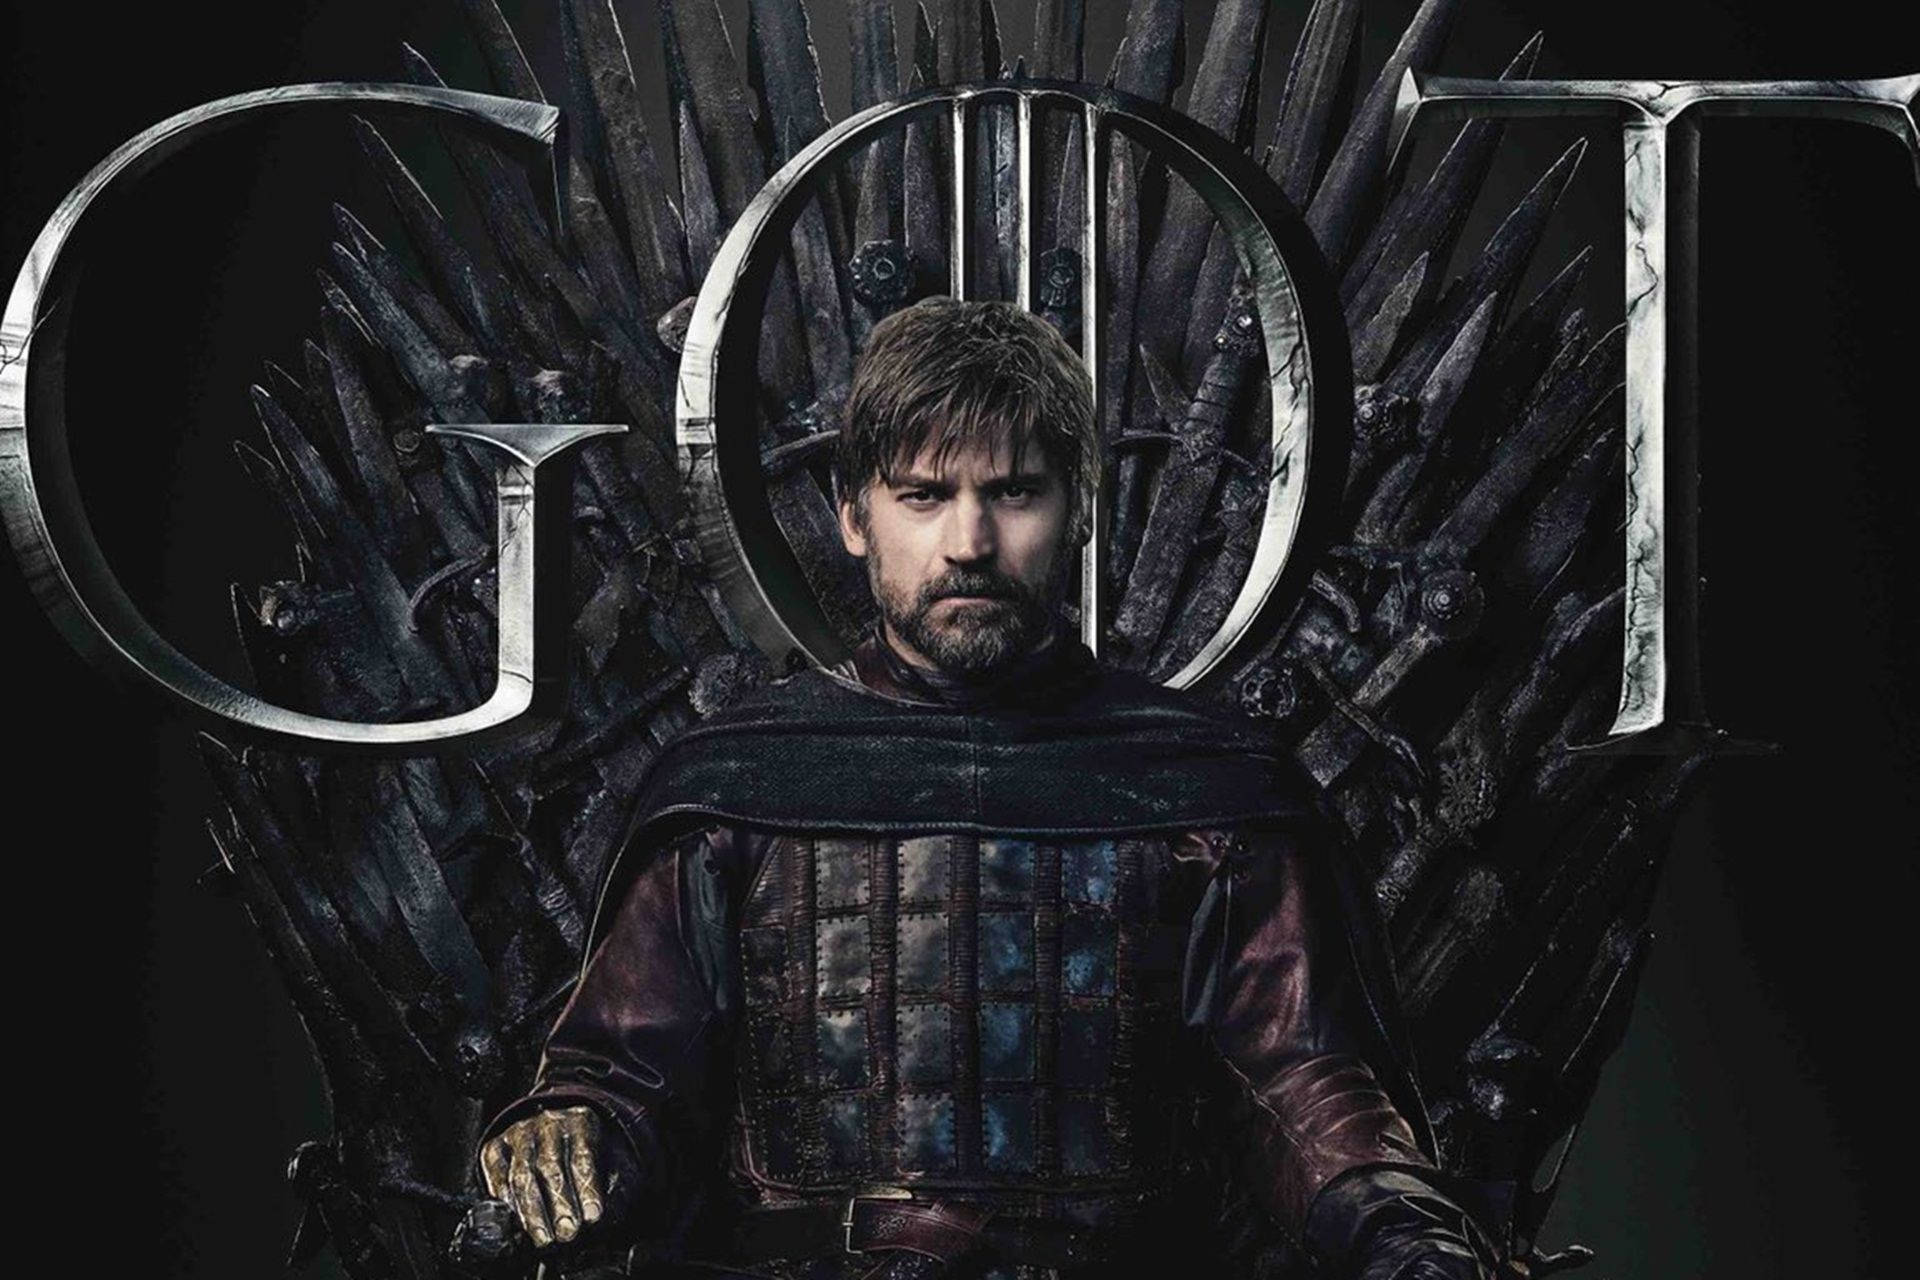 Free Game Of Thrones Season 8 Wallpaper Downloads, [100+] Game Of Thrones  Season 8 Wallpapers for FREE 